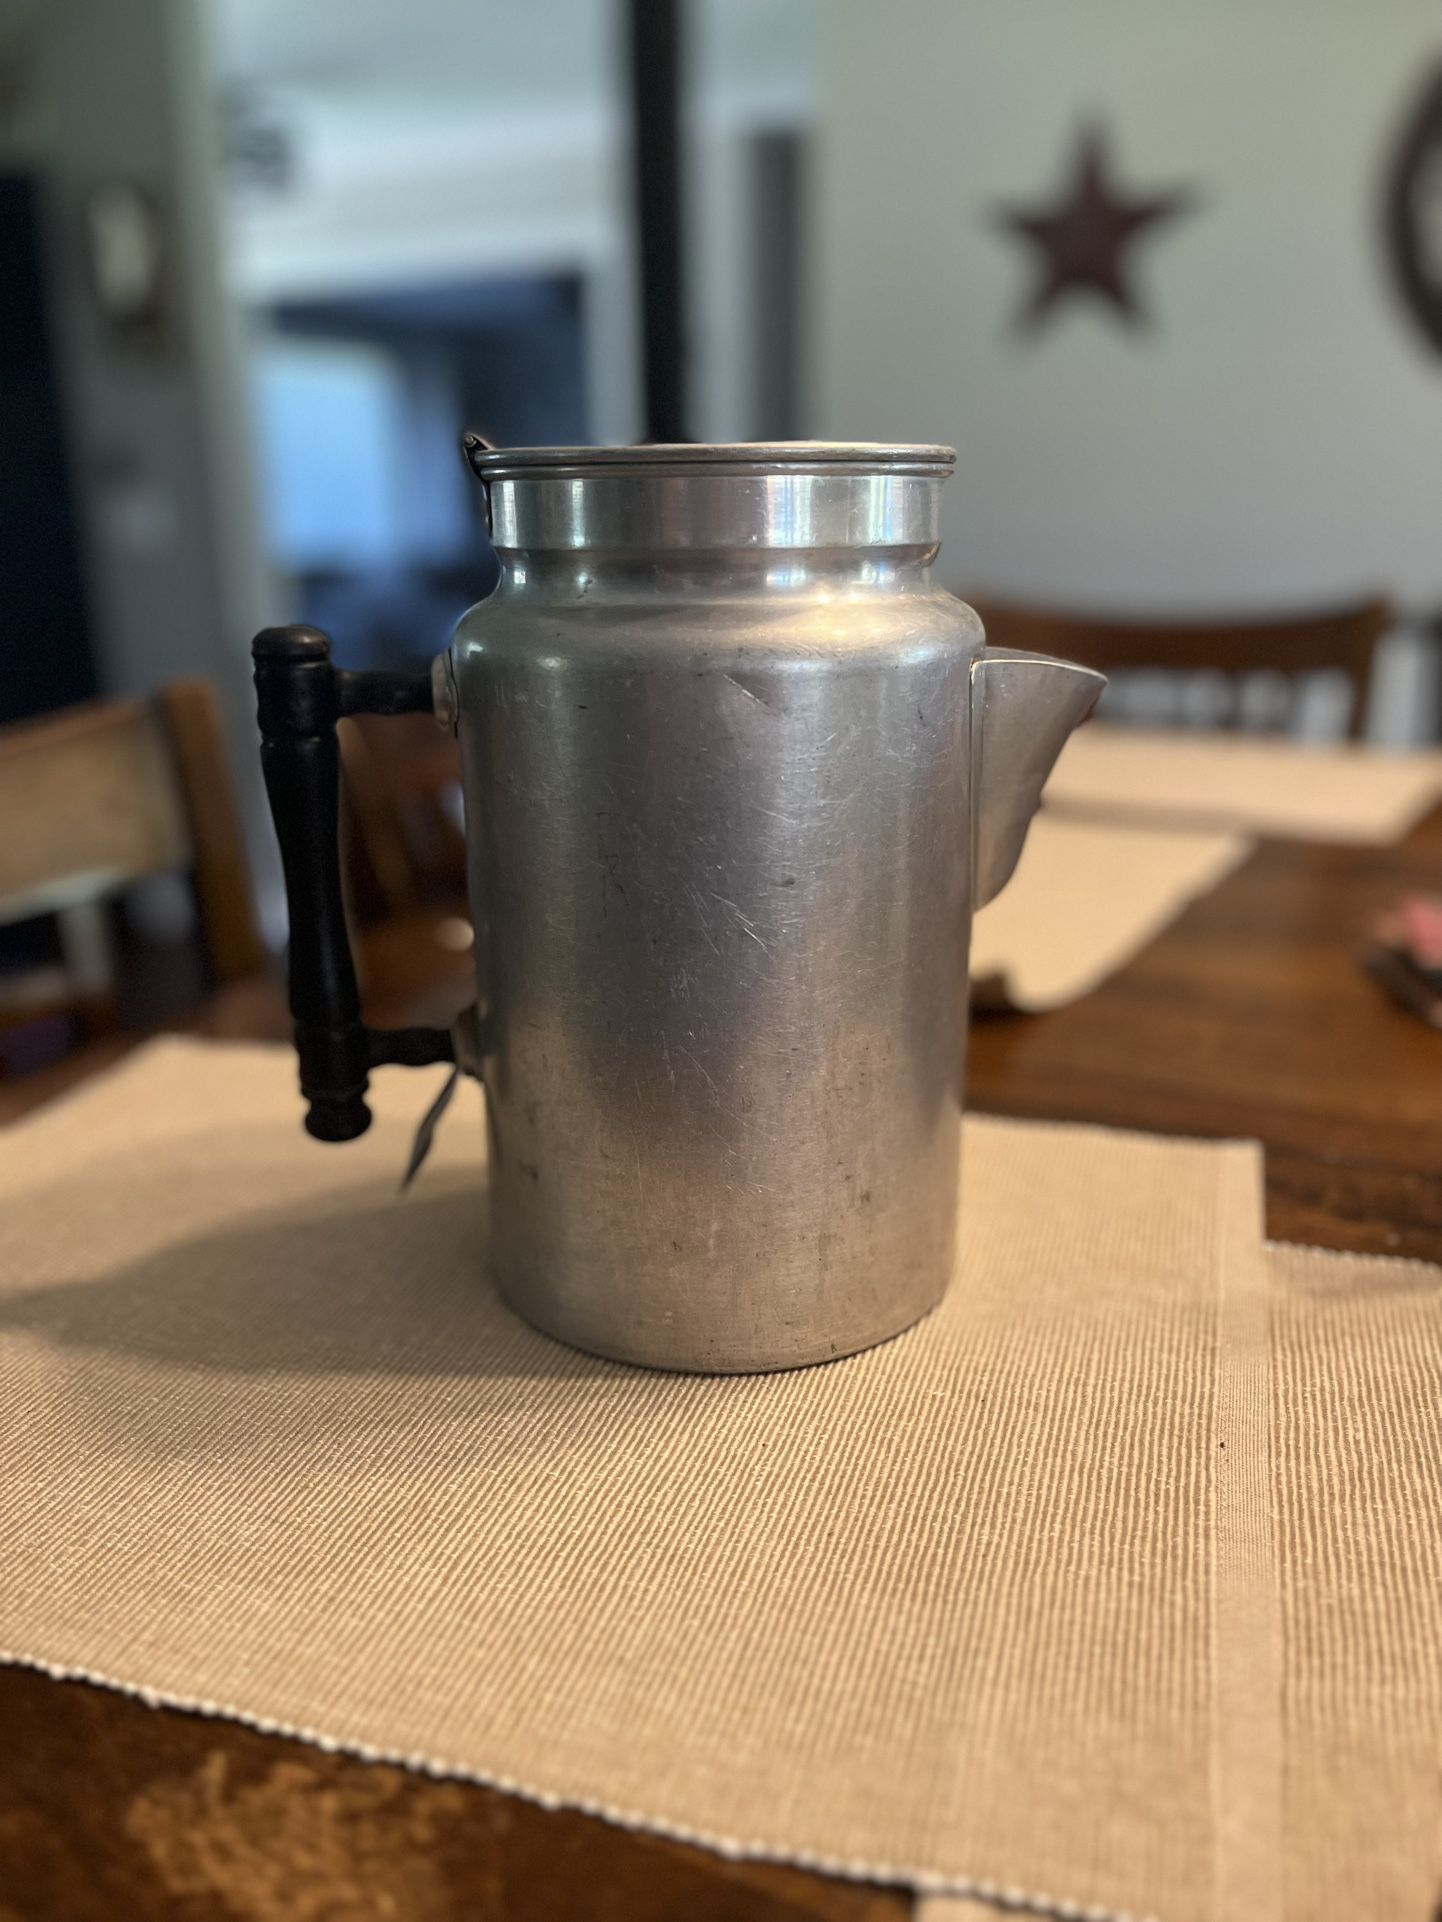 Viko Vintage Aluminum Coffee Pot for Sale in Chandler, AZ - OfferUp